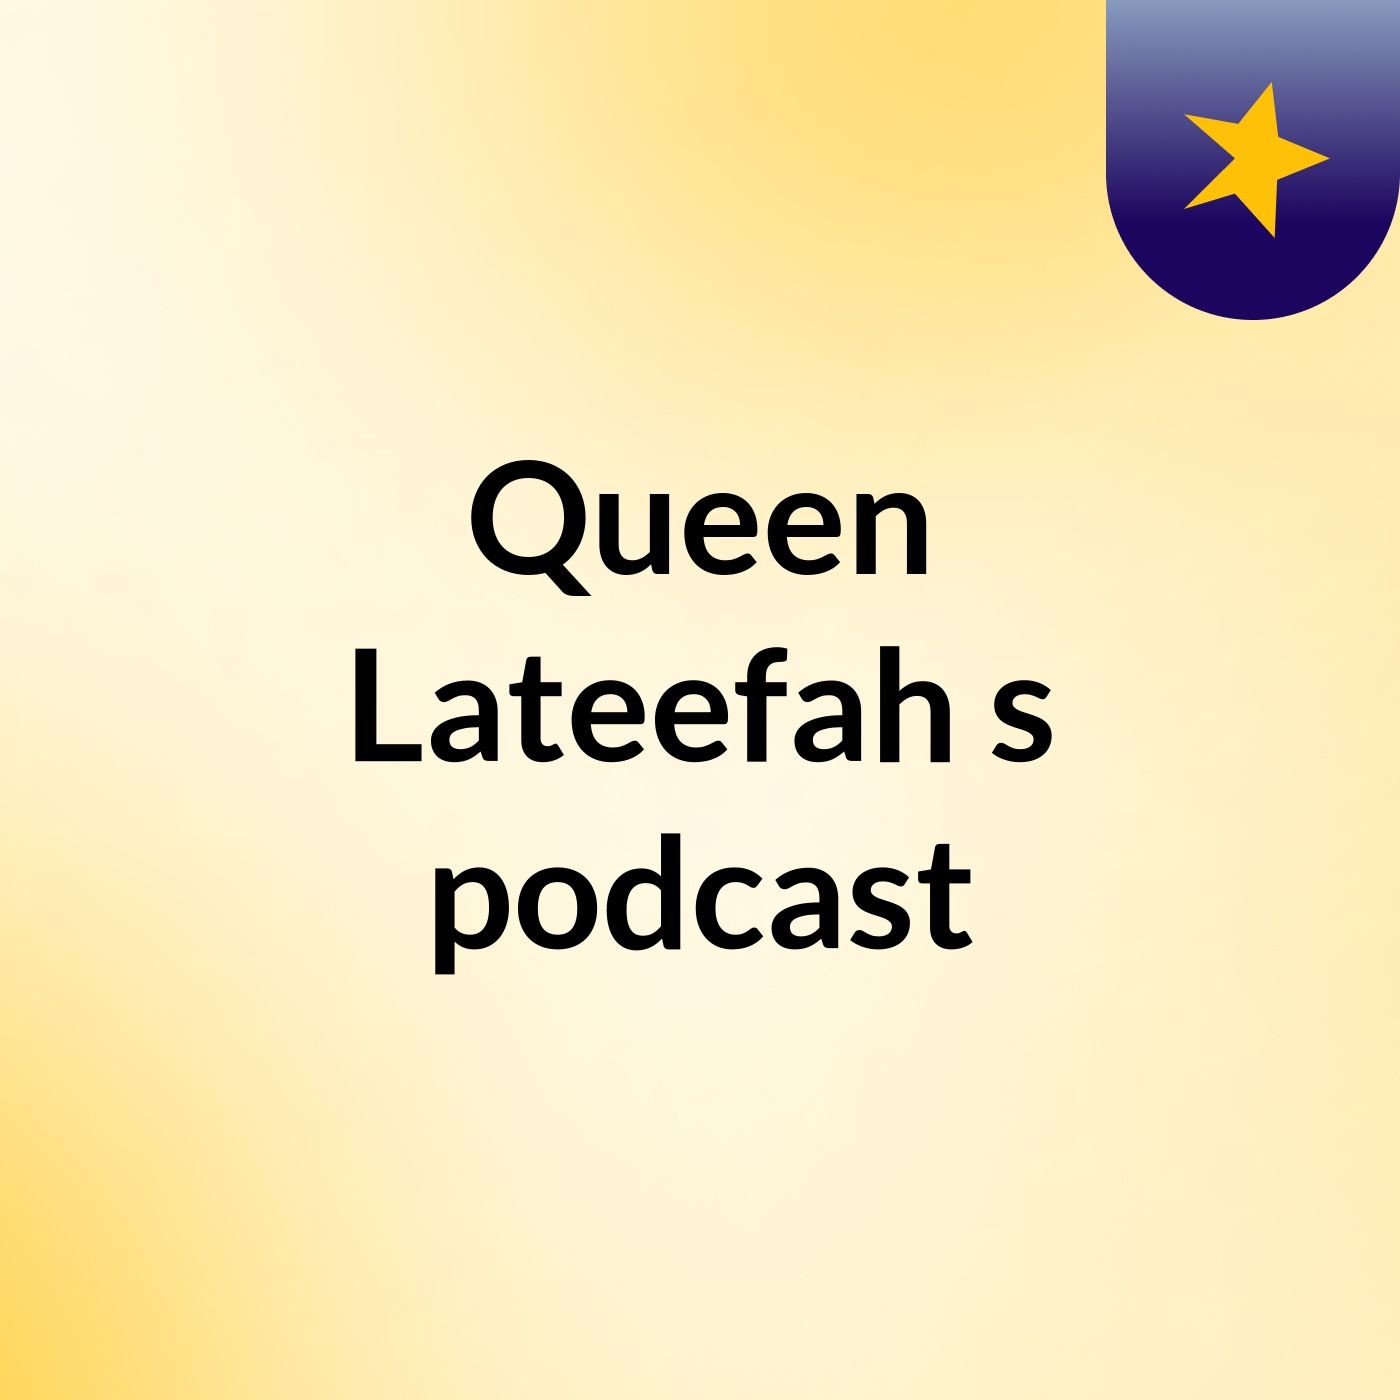 Episode 4 - Queen Lateefah's podcast